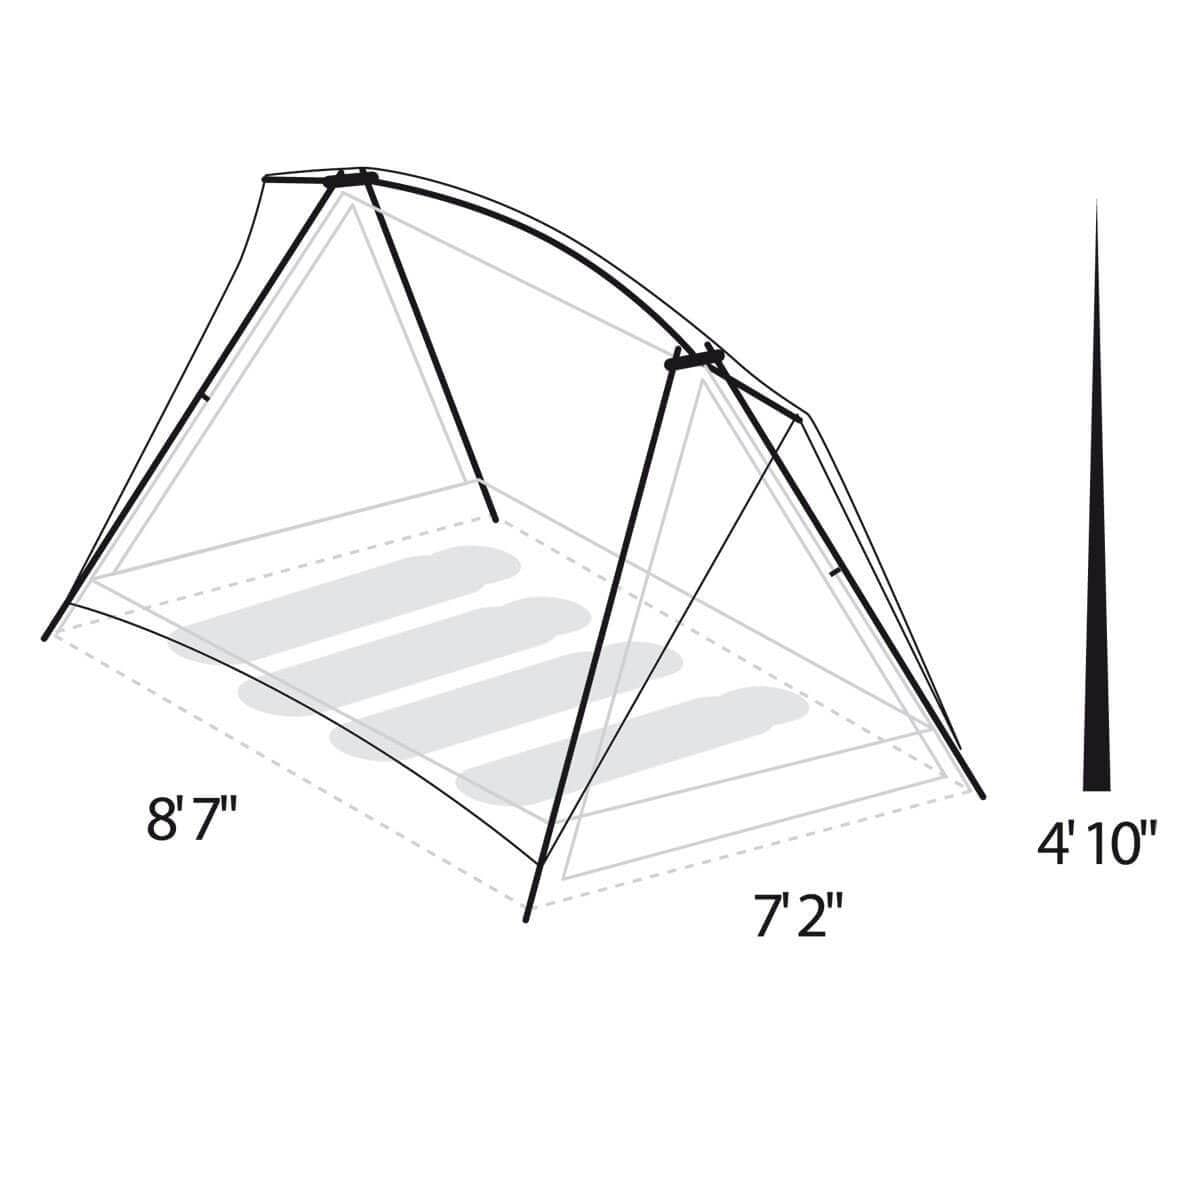 Eureka Timberline 4 Tent Campmor